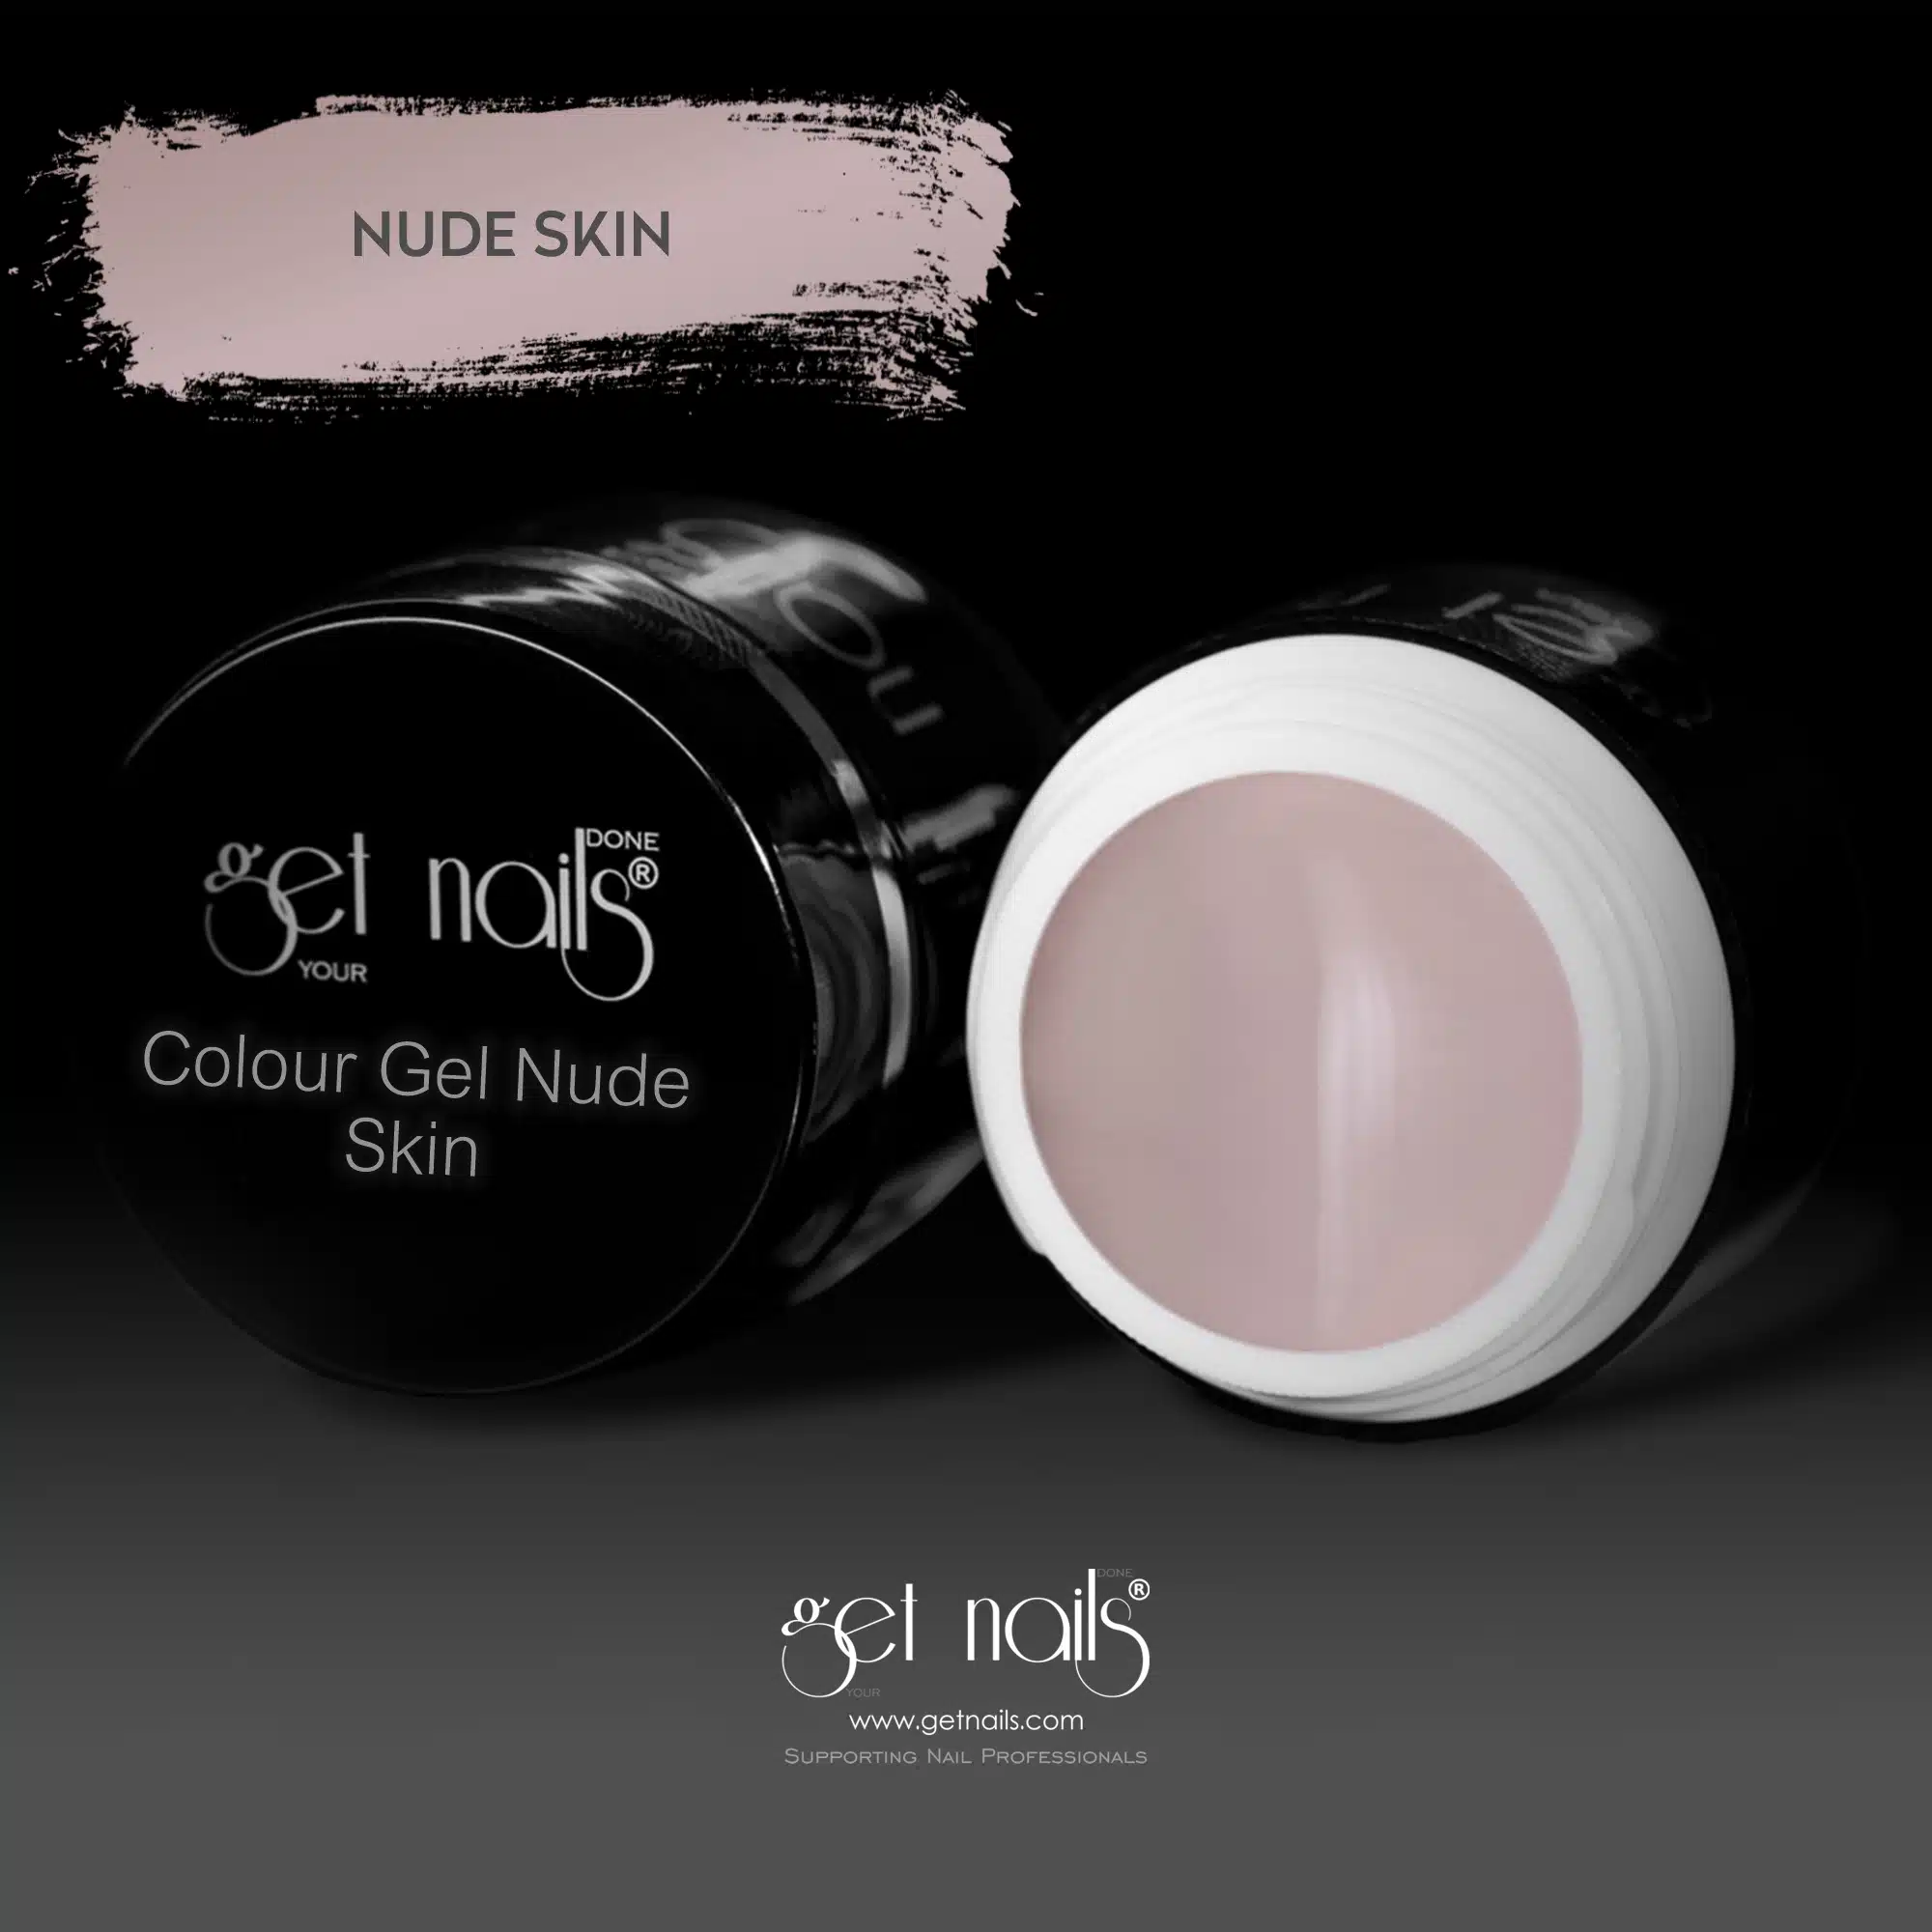 Get Nails Austria - Colour Gel Nude Skin 5g